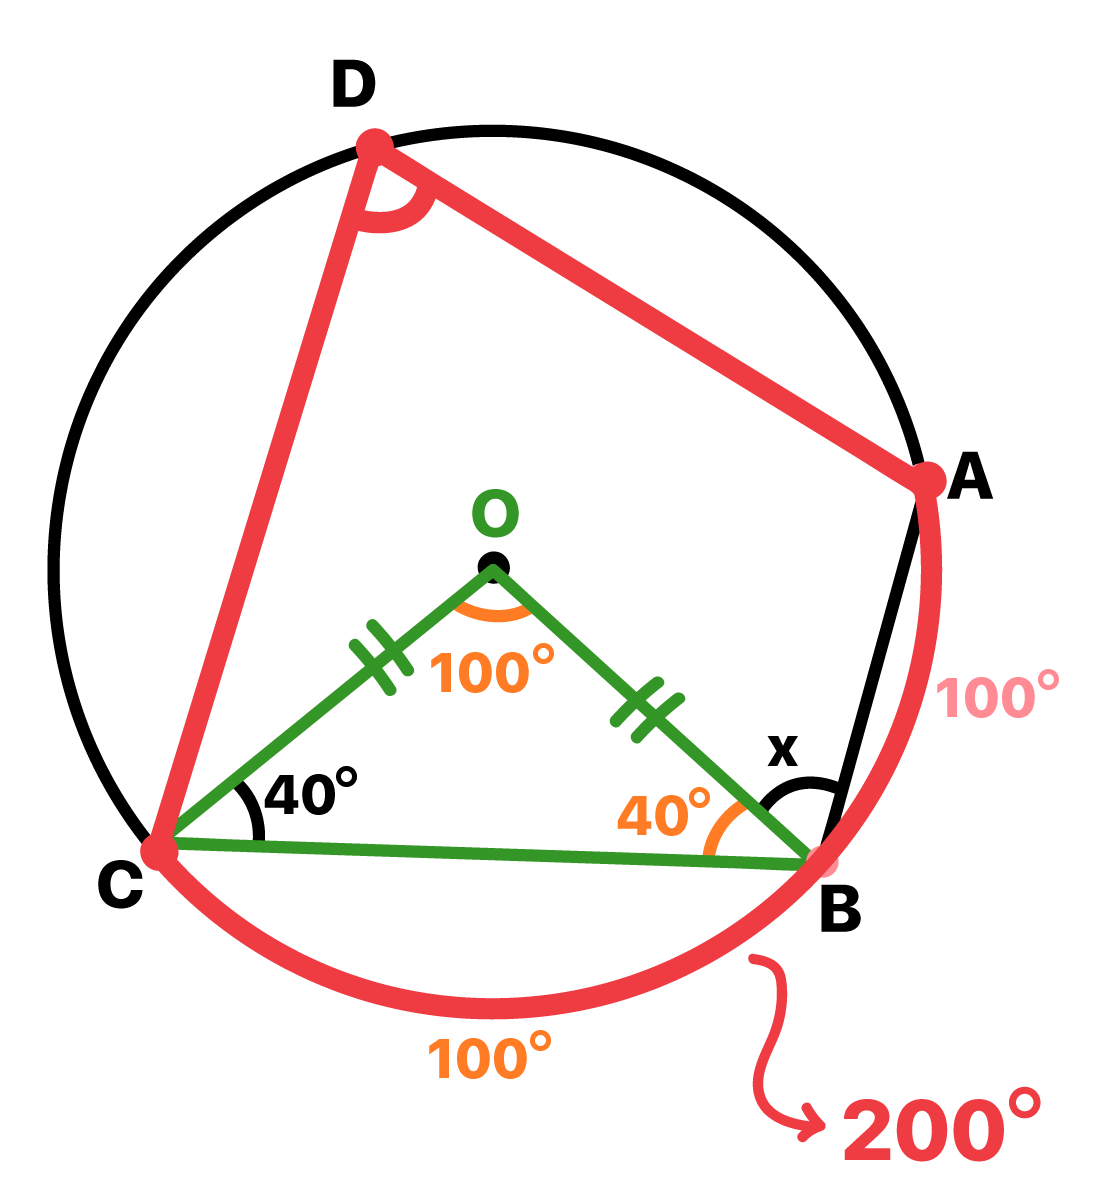 Ângulo inscrito de vértice D possui arco correspondente de 200 graus